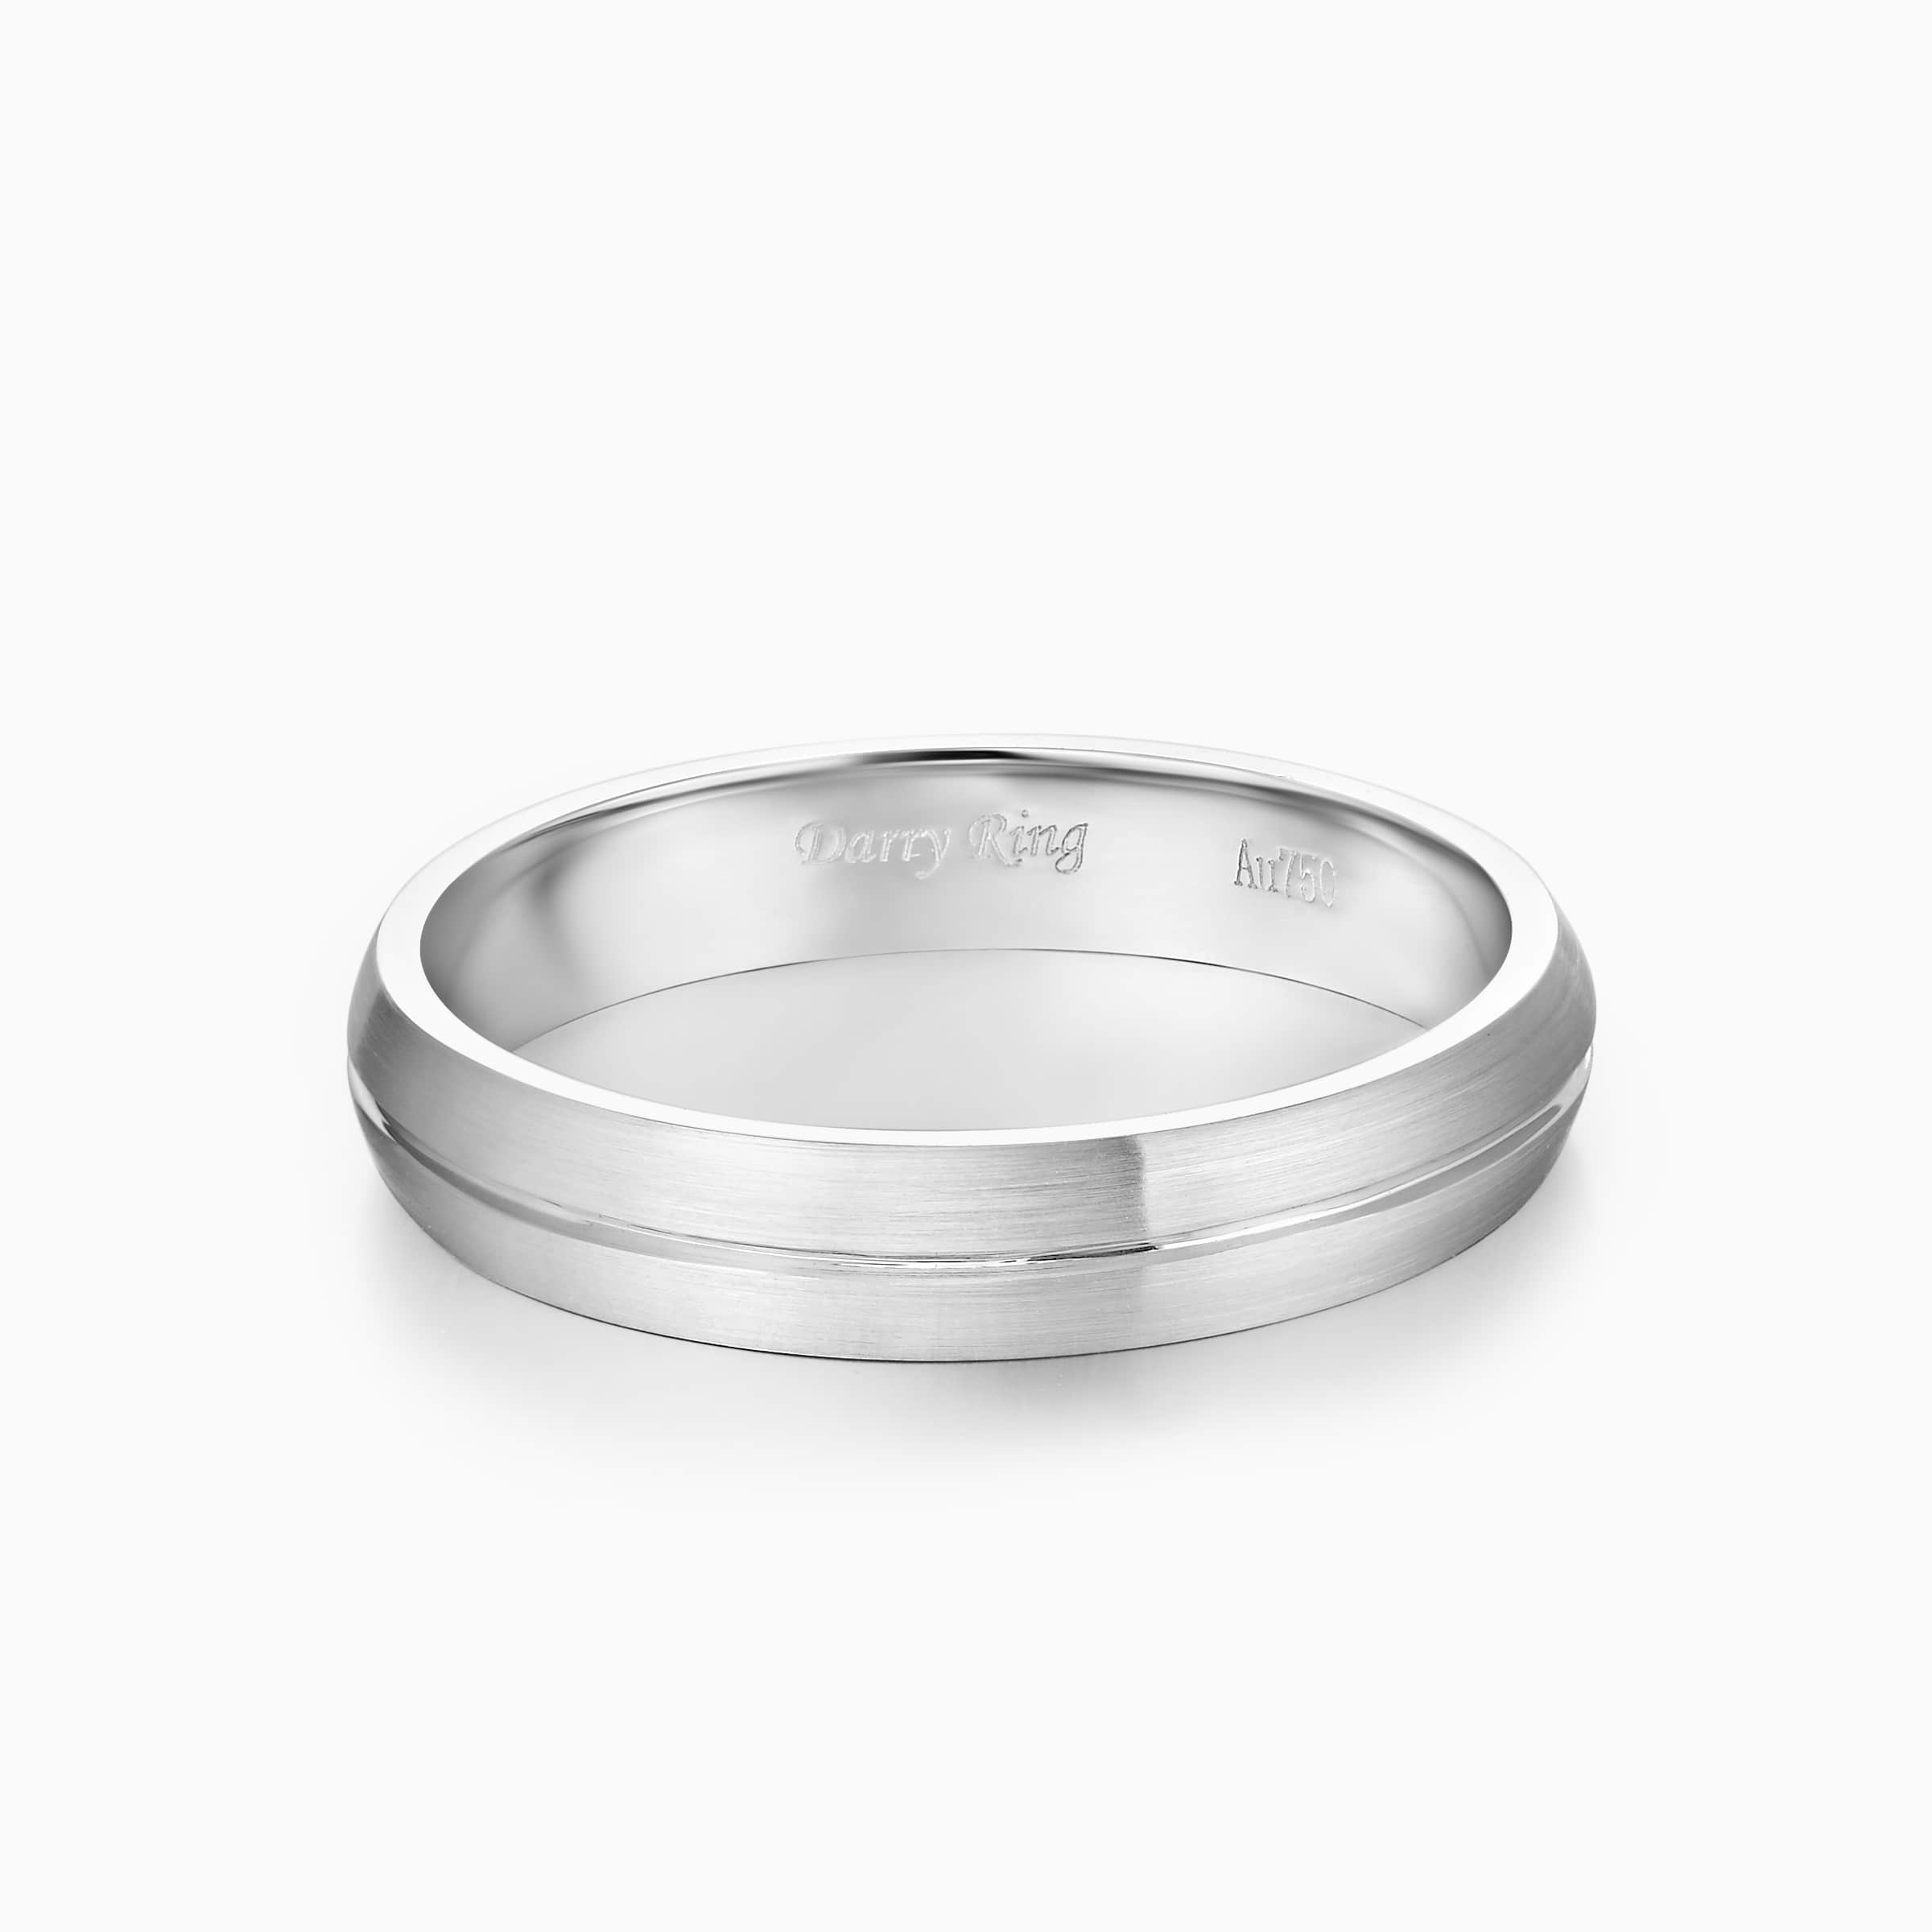 Darry Ring men's simple ring